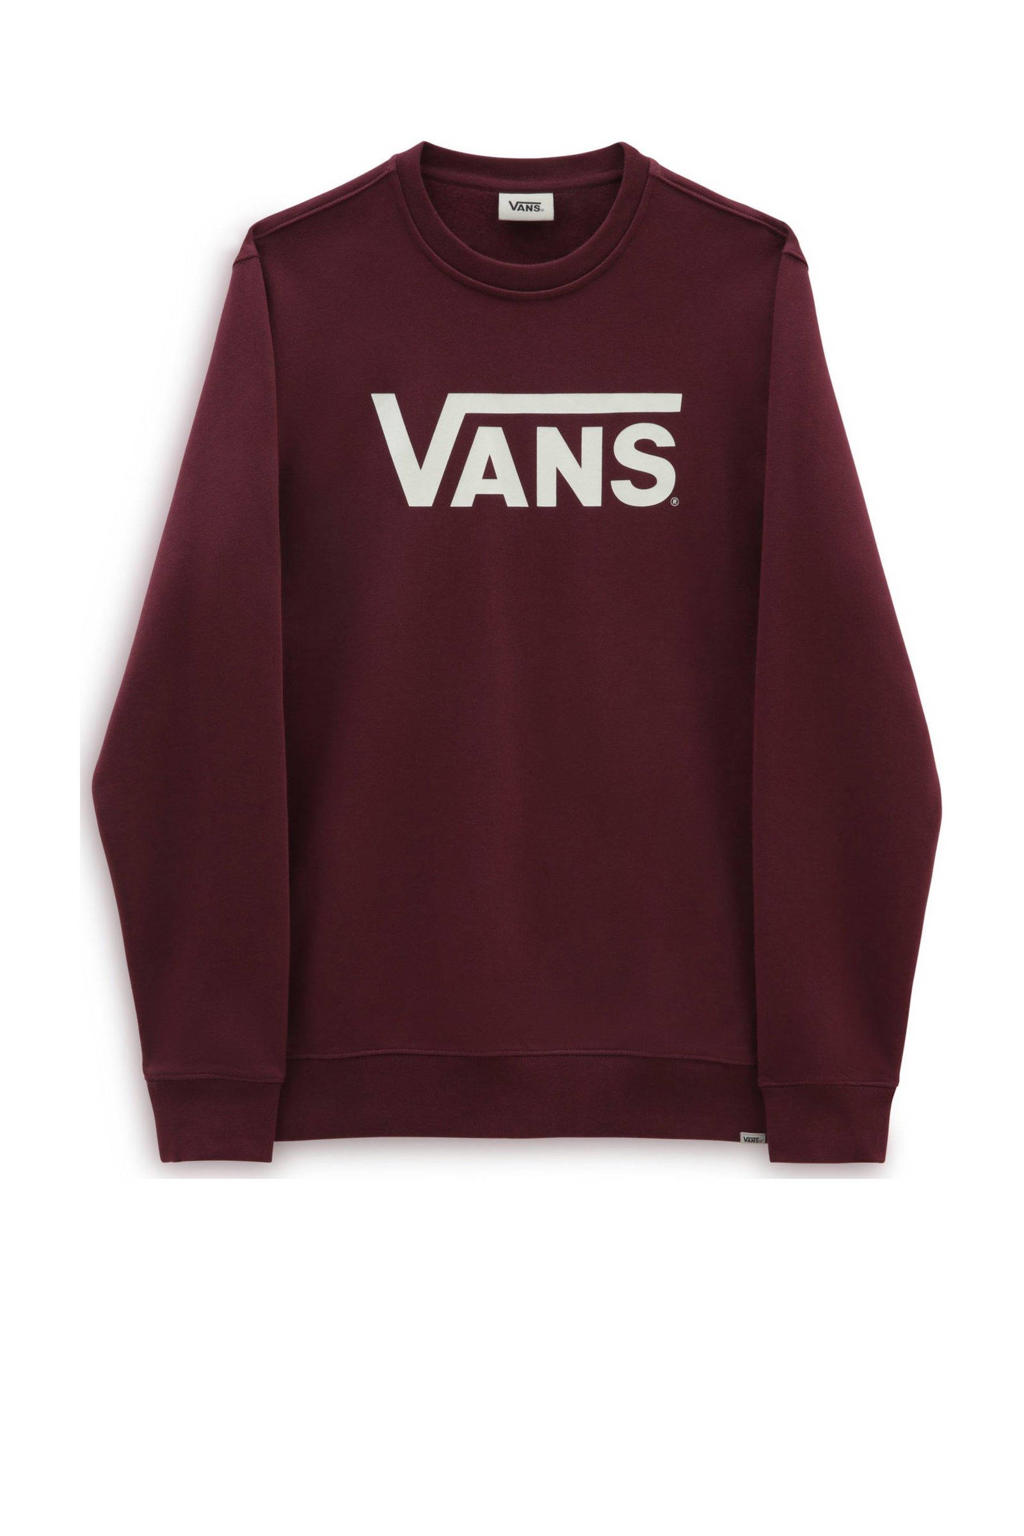 VANS sweater met logo donkerrood